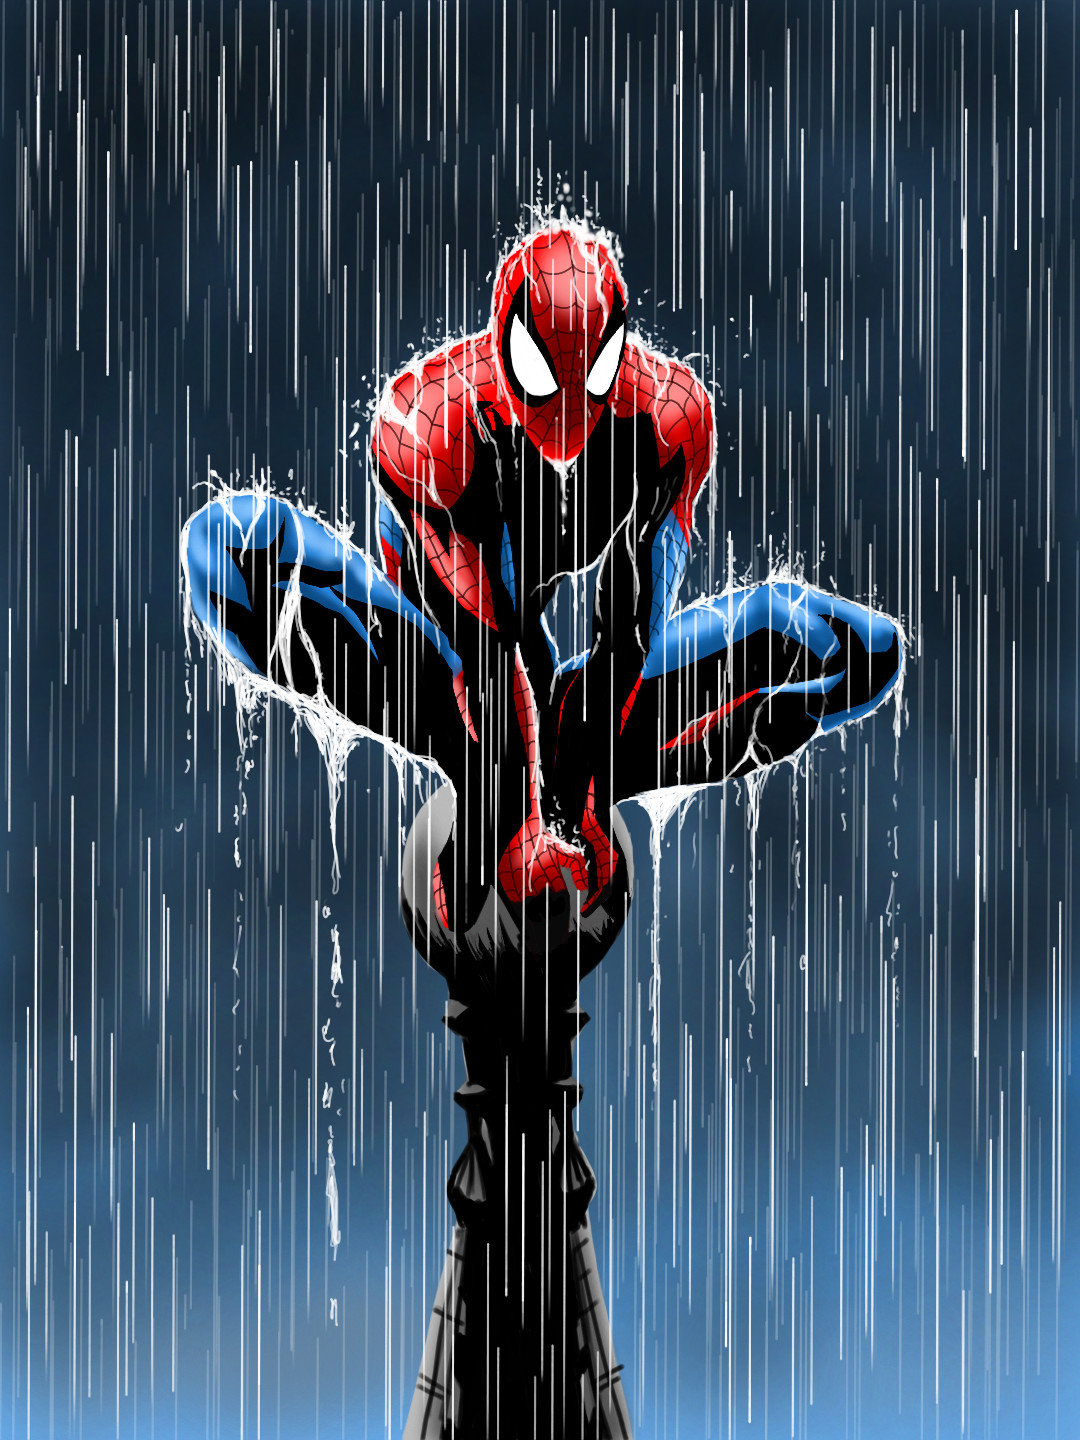 Daily Cartoon Drawings - Drawing Spider Man